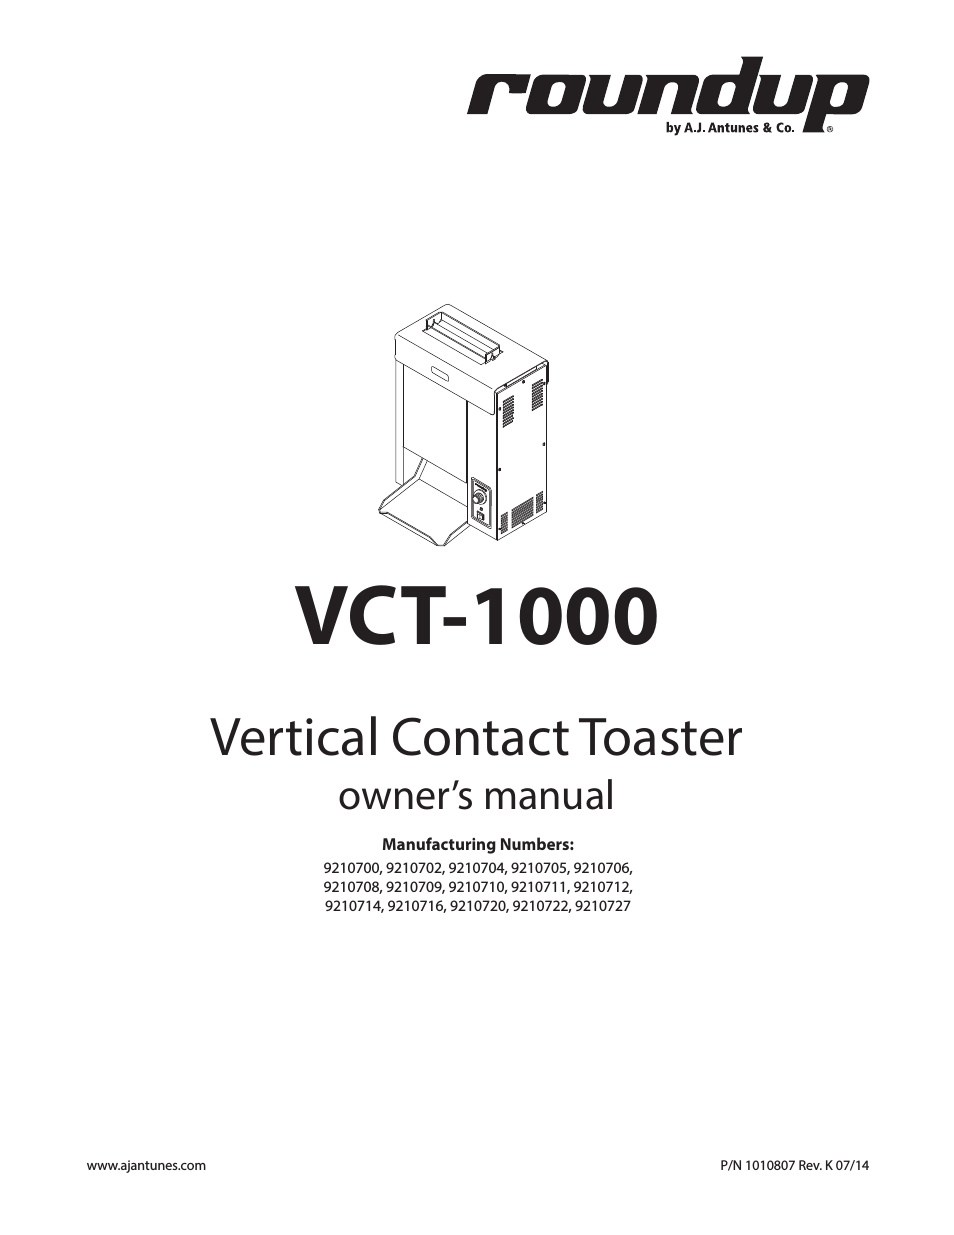 VCT-1000 9210702